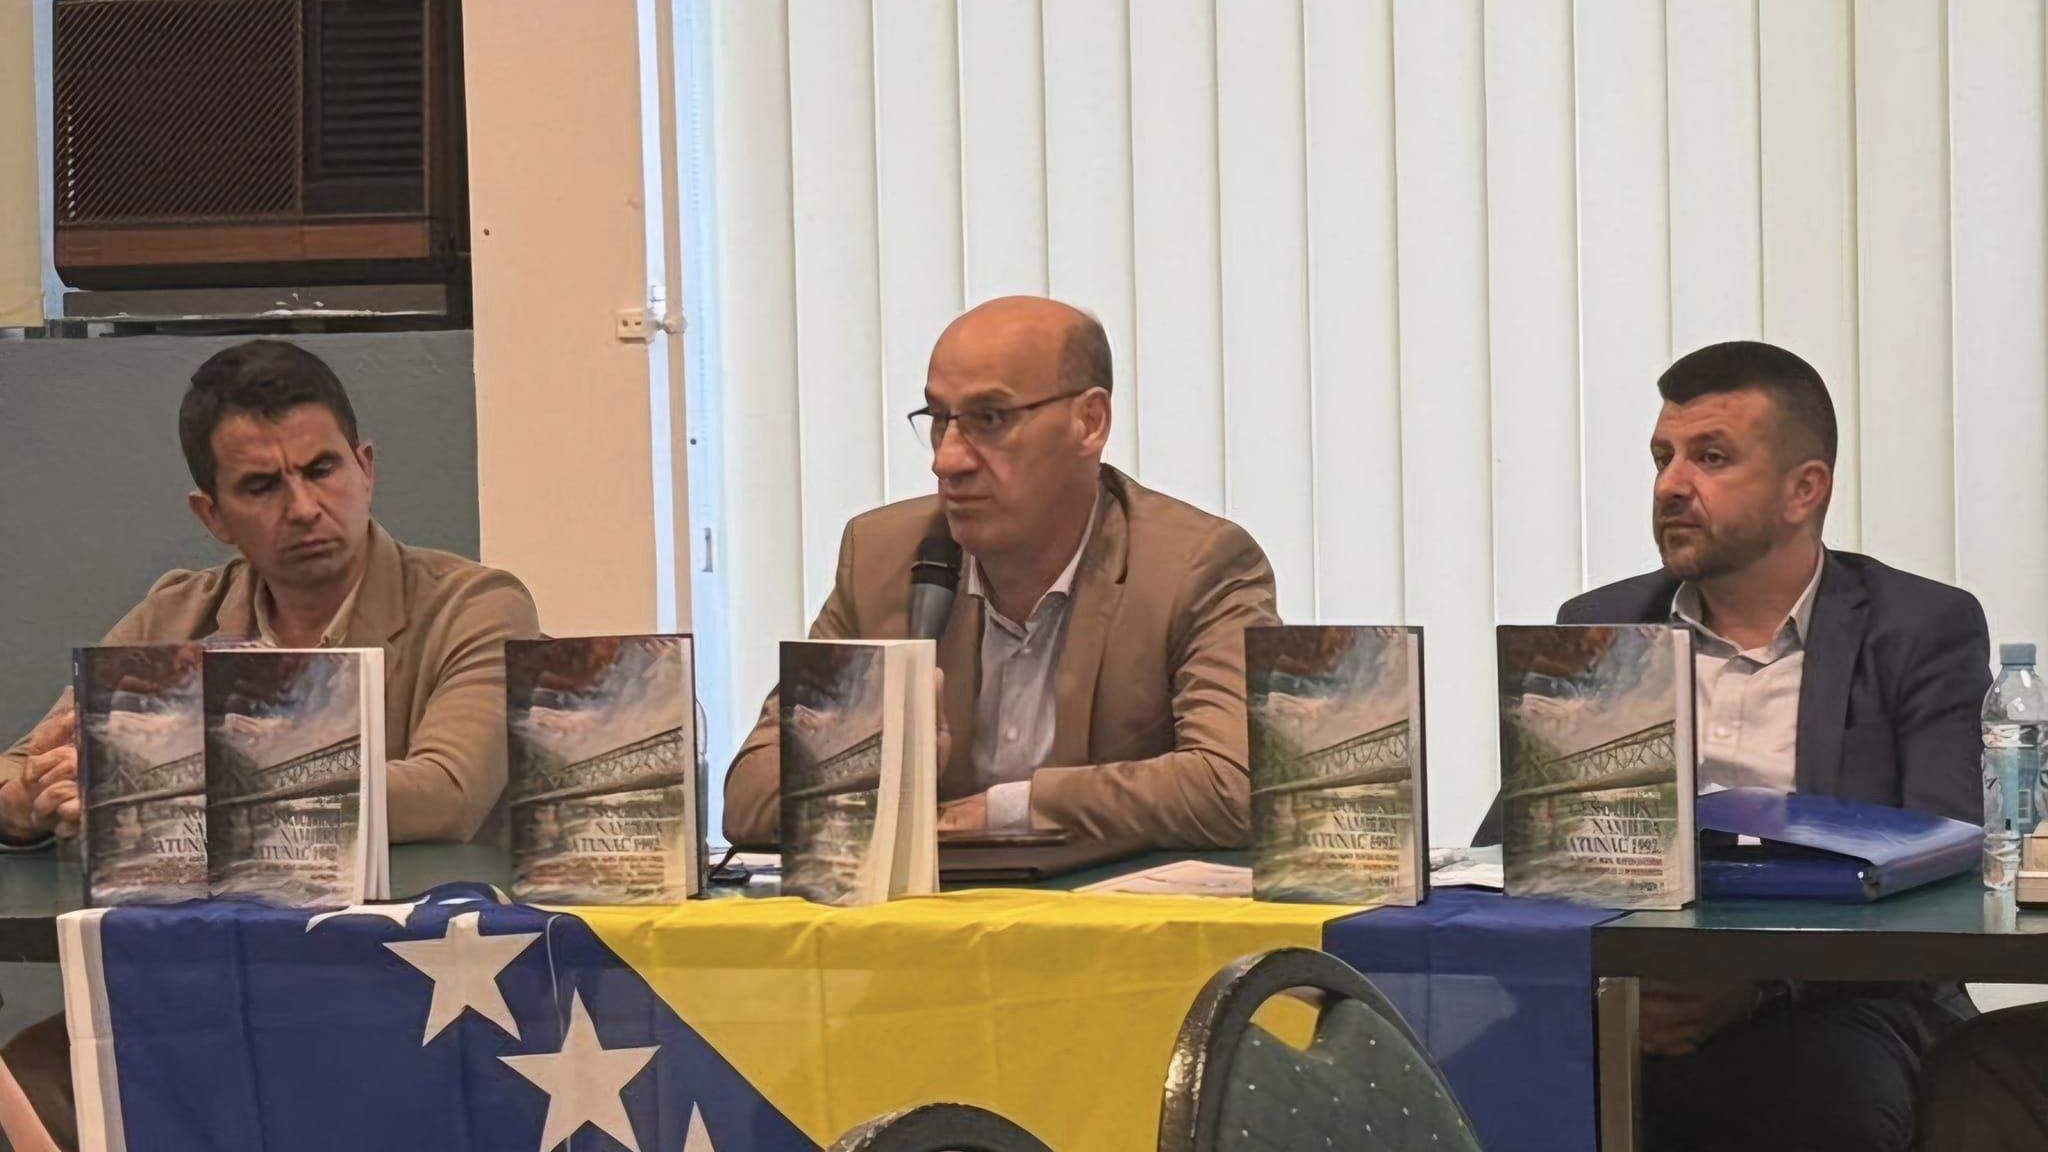 Švicarska: Održana tribina i promocija knjiga "Genocidna namjera Bratunac 1992." 